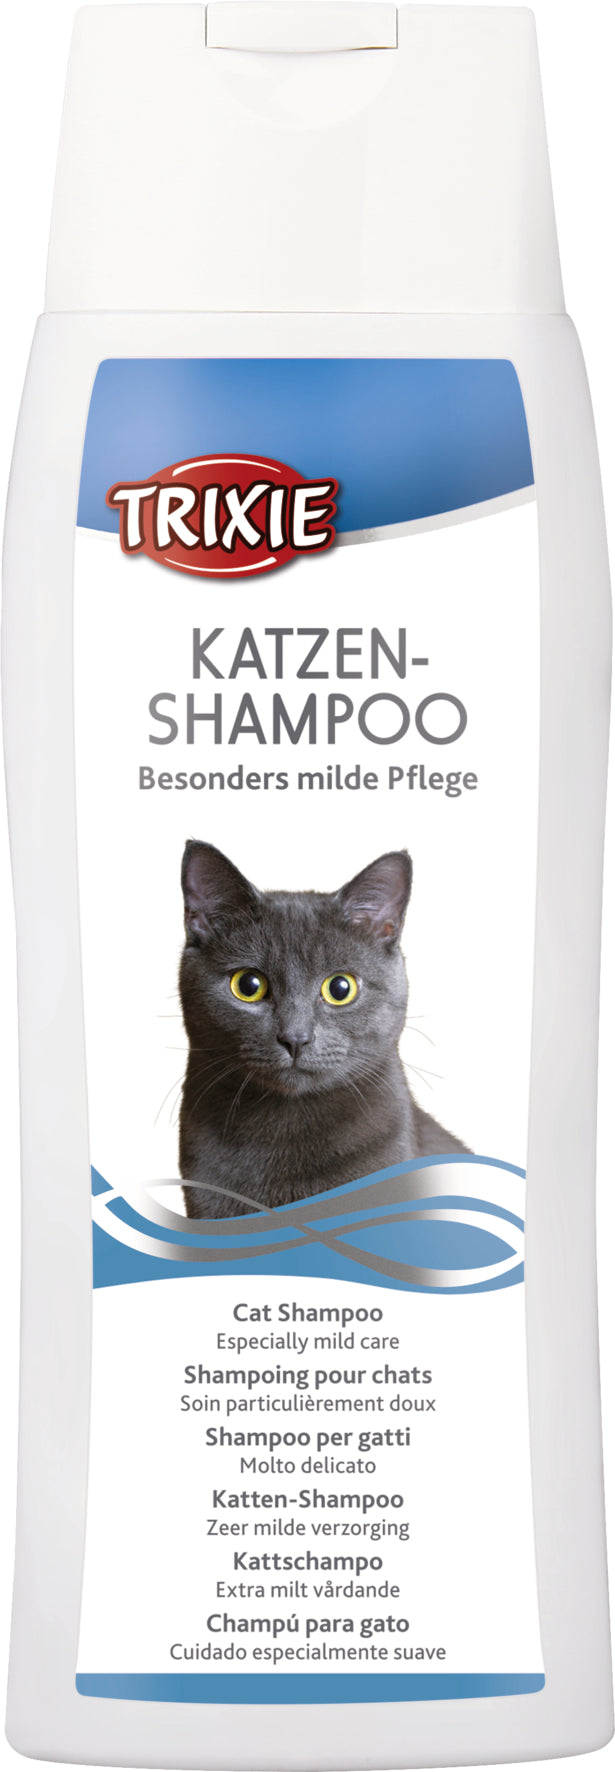 Trixie Cat Shampoo - PetsCura